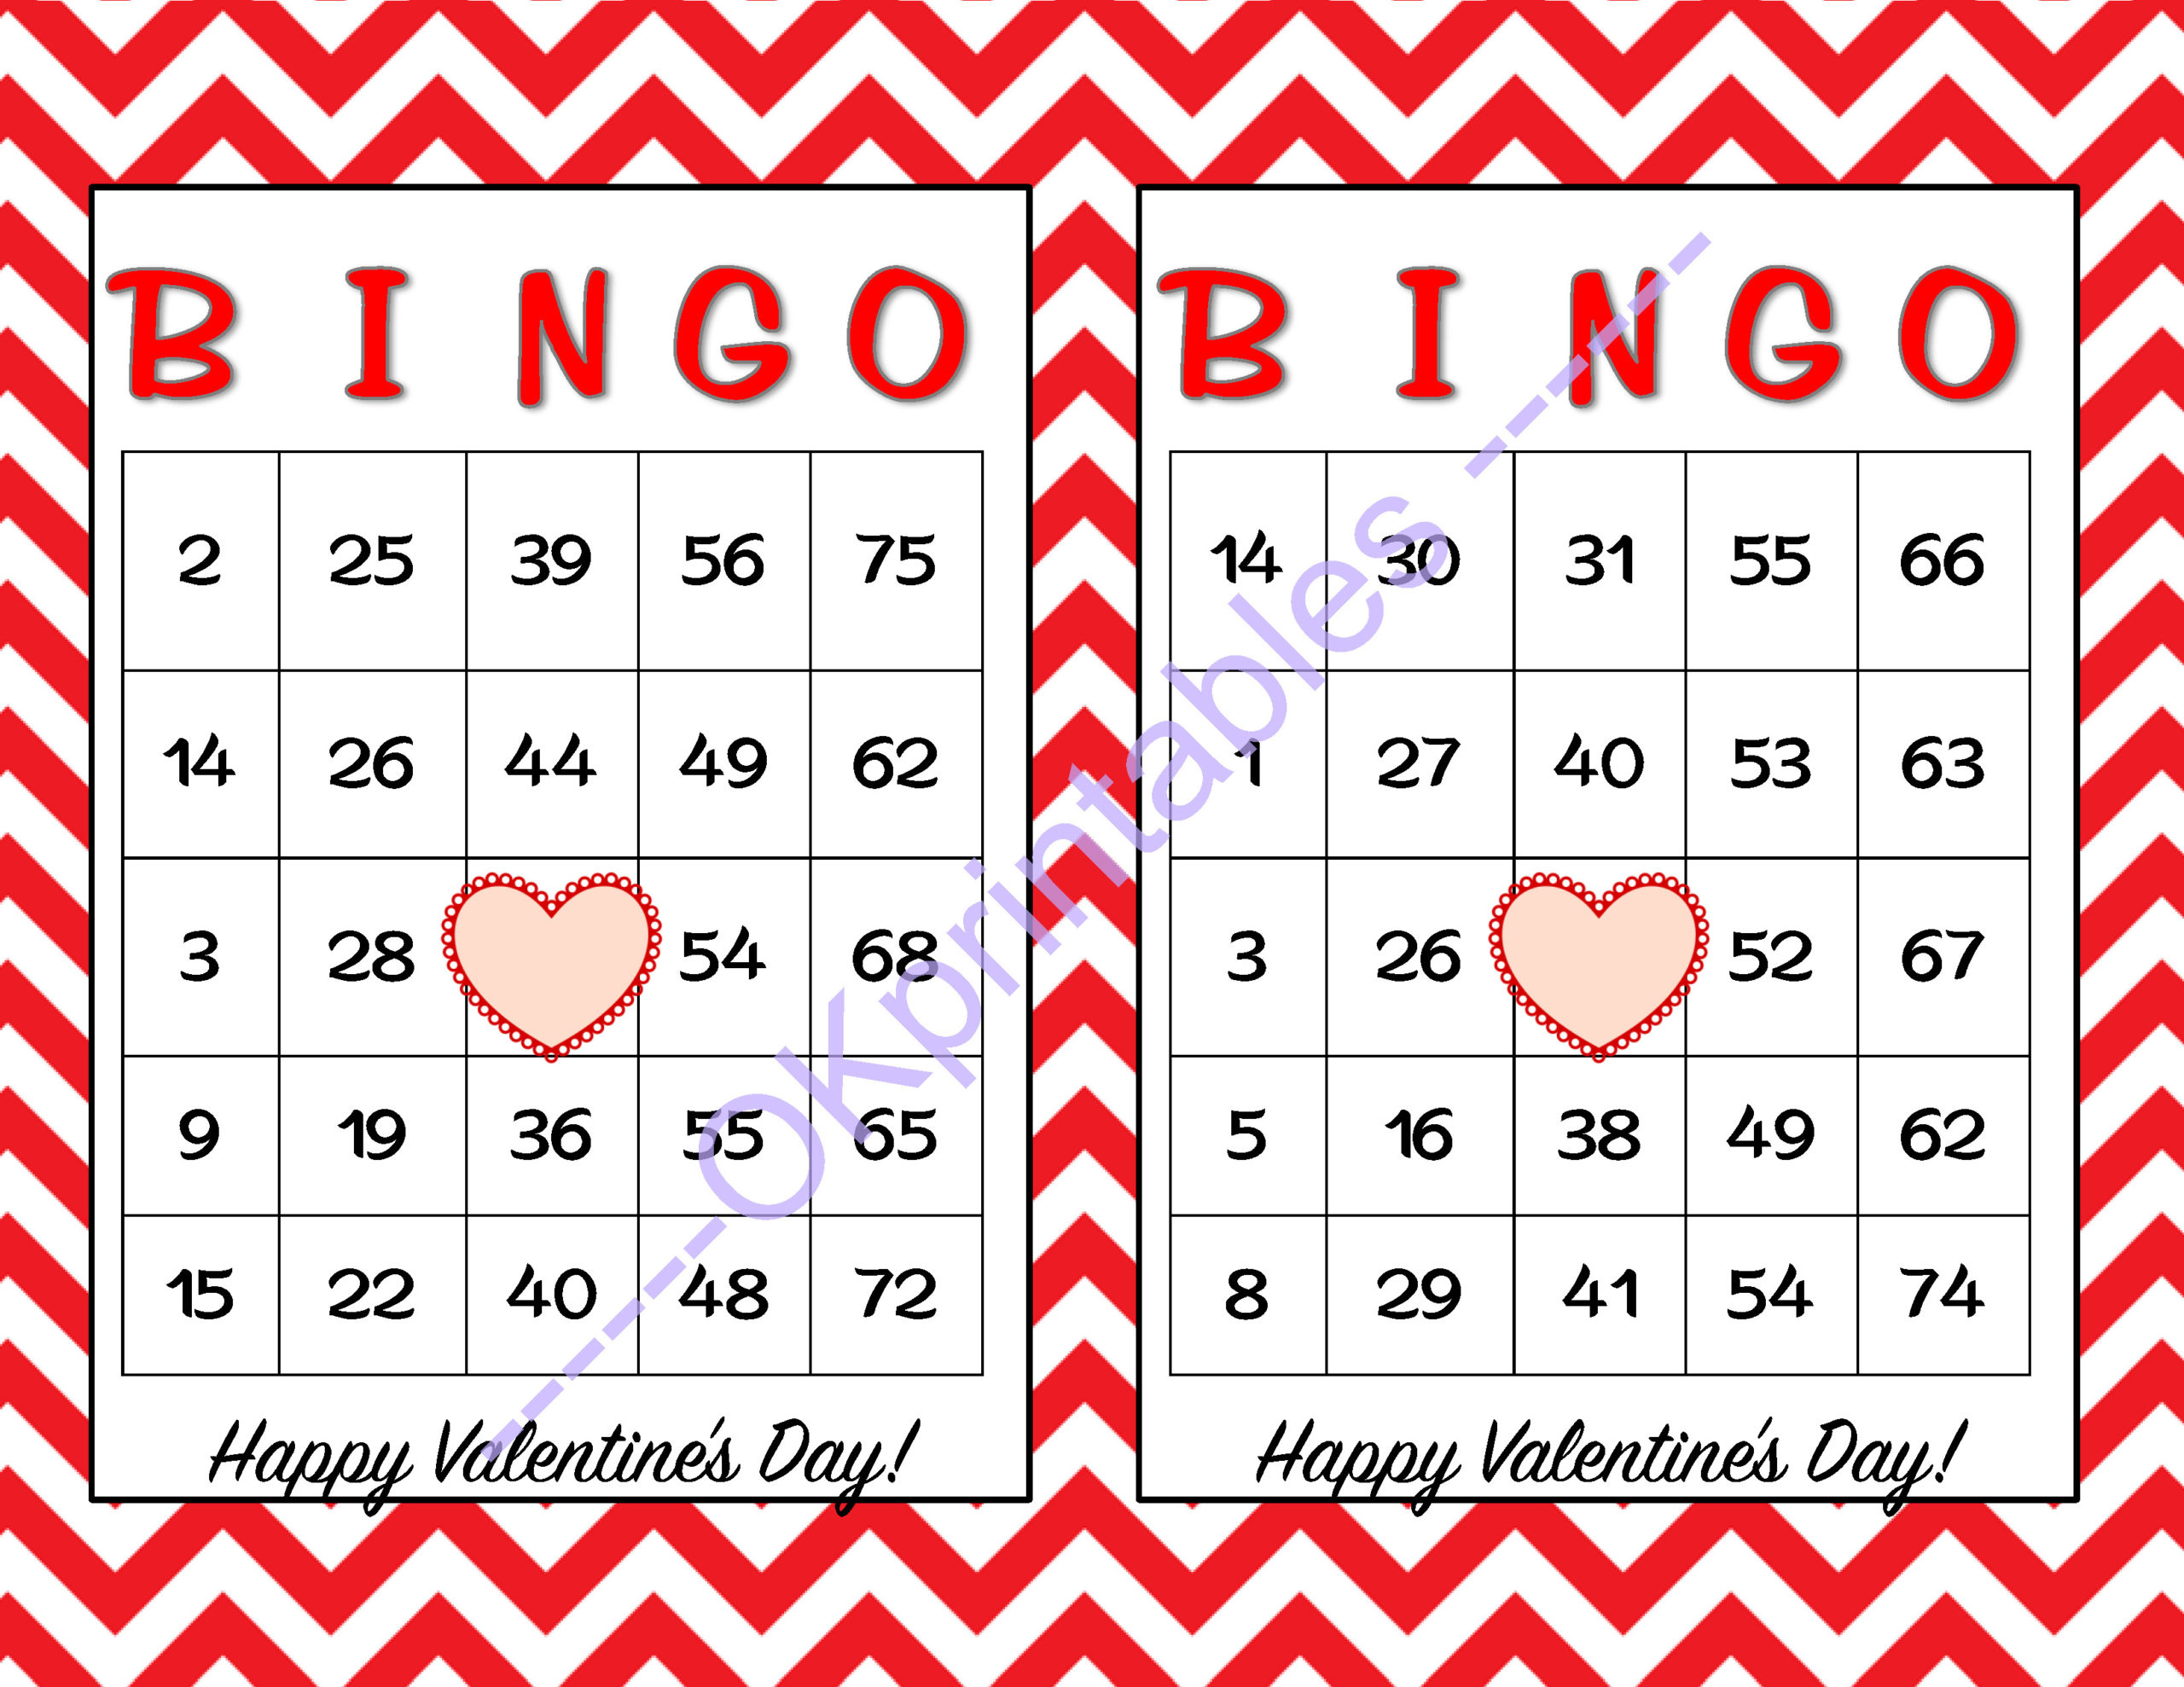 30 Happy Valentines Day Bingo Cards By Okprintables On Zibbet